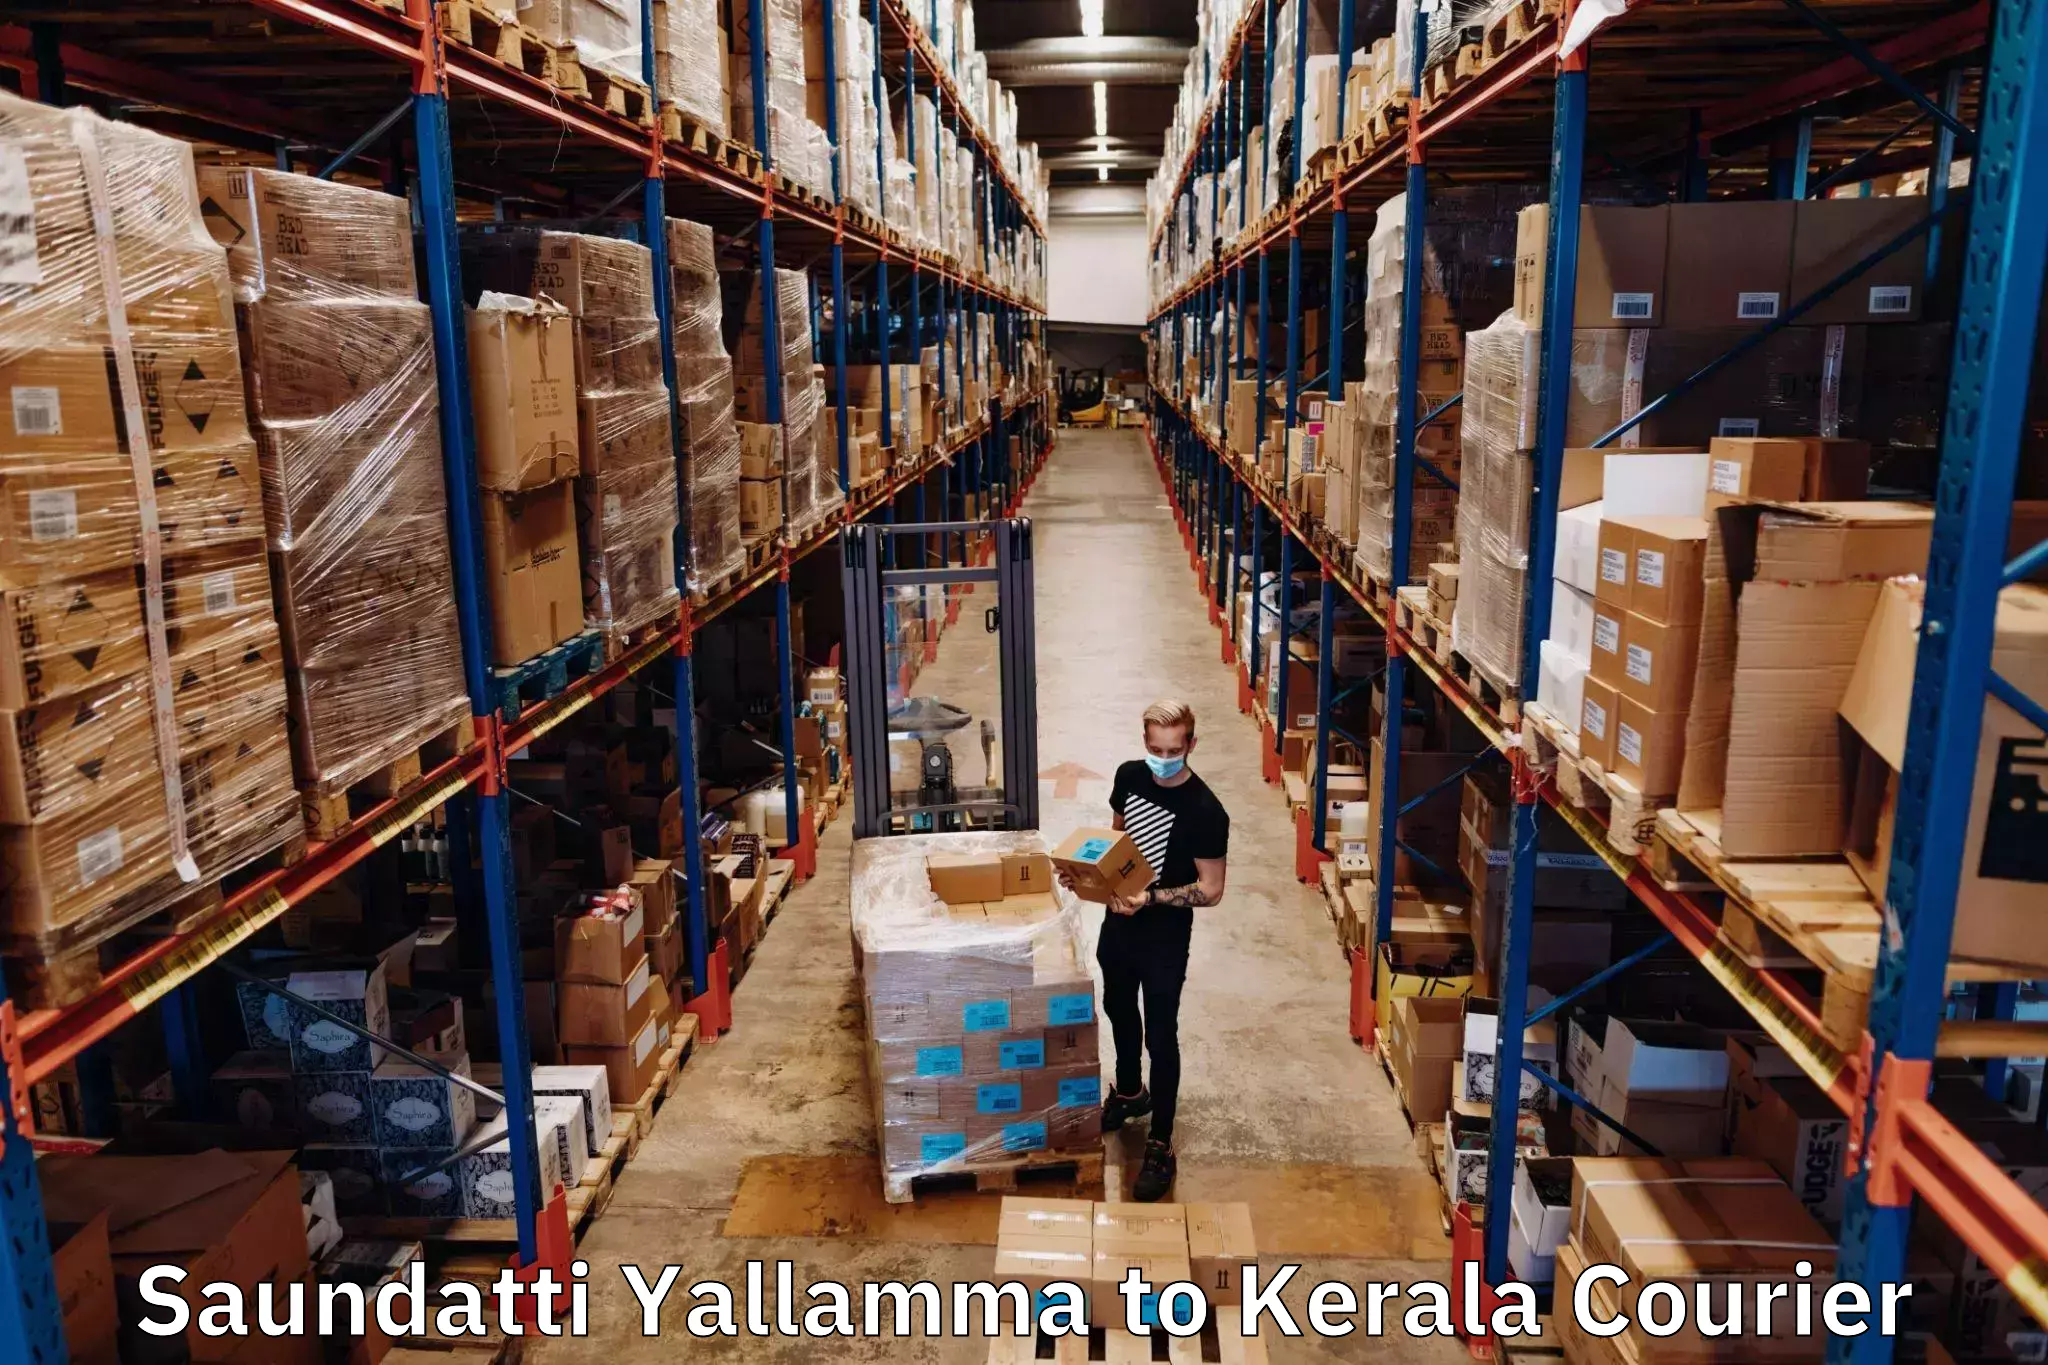 Courier service partnerships Saundatti Yallamma to Kalpetta